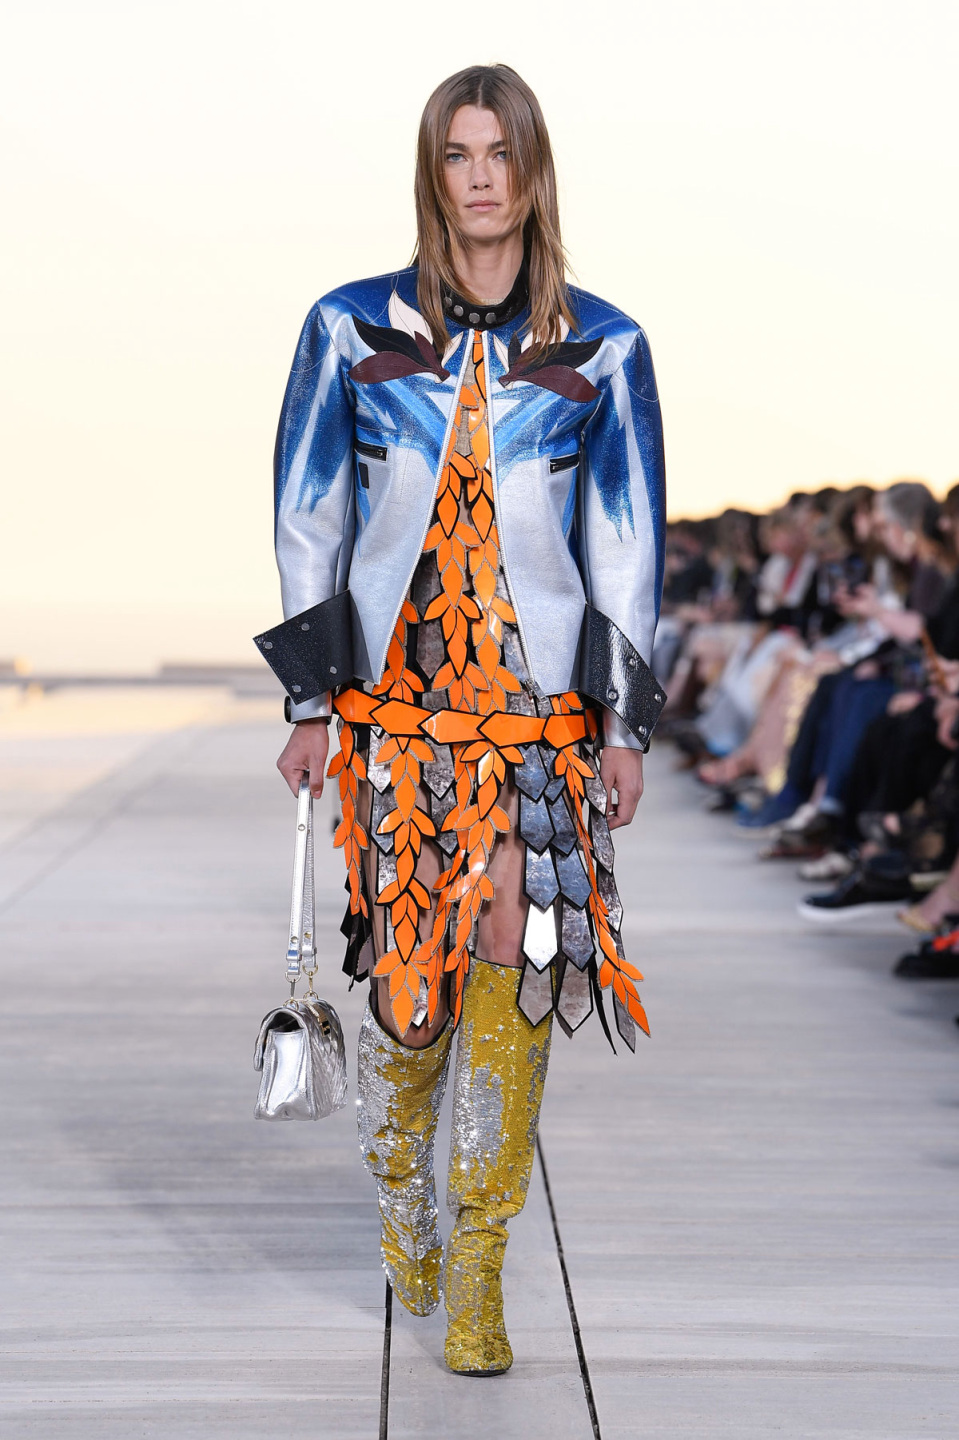 Runway? Try Bridgeway? Louis Vuitton turns bridge into massive fashion show